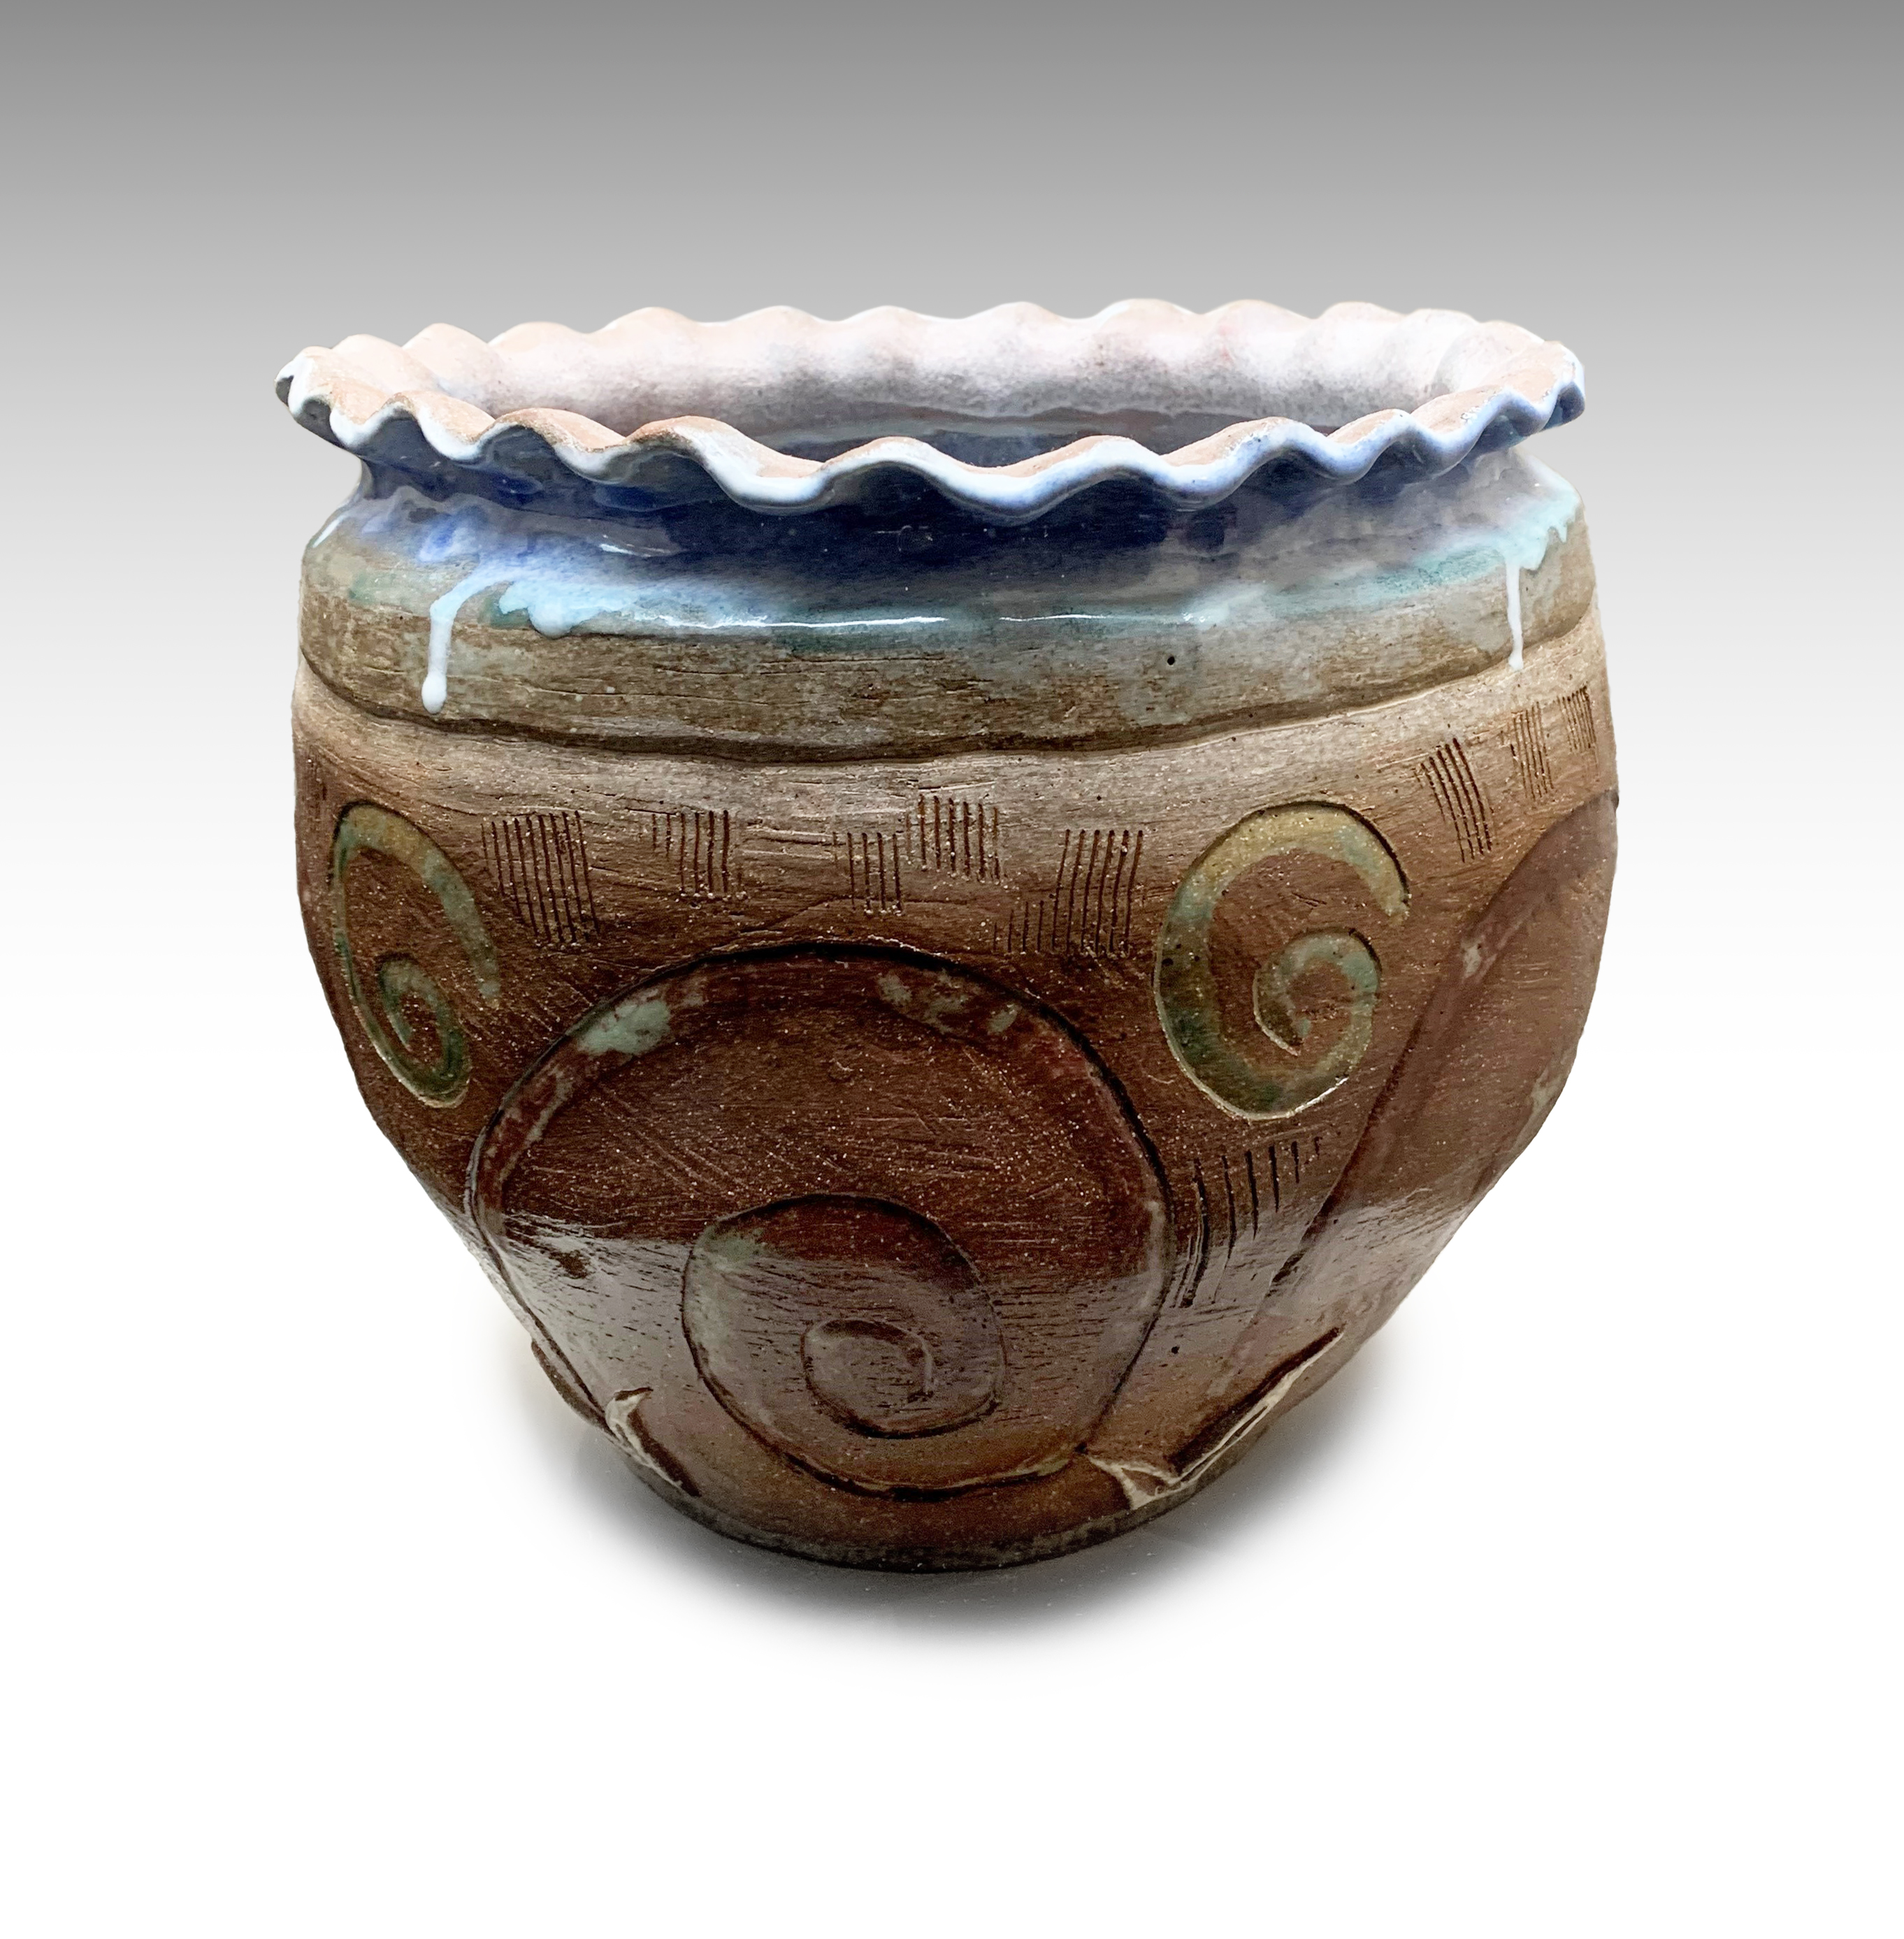 This art piece is named ‘Handbuilt Bowl' 